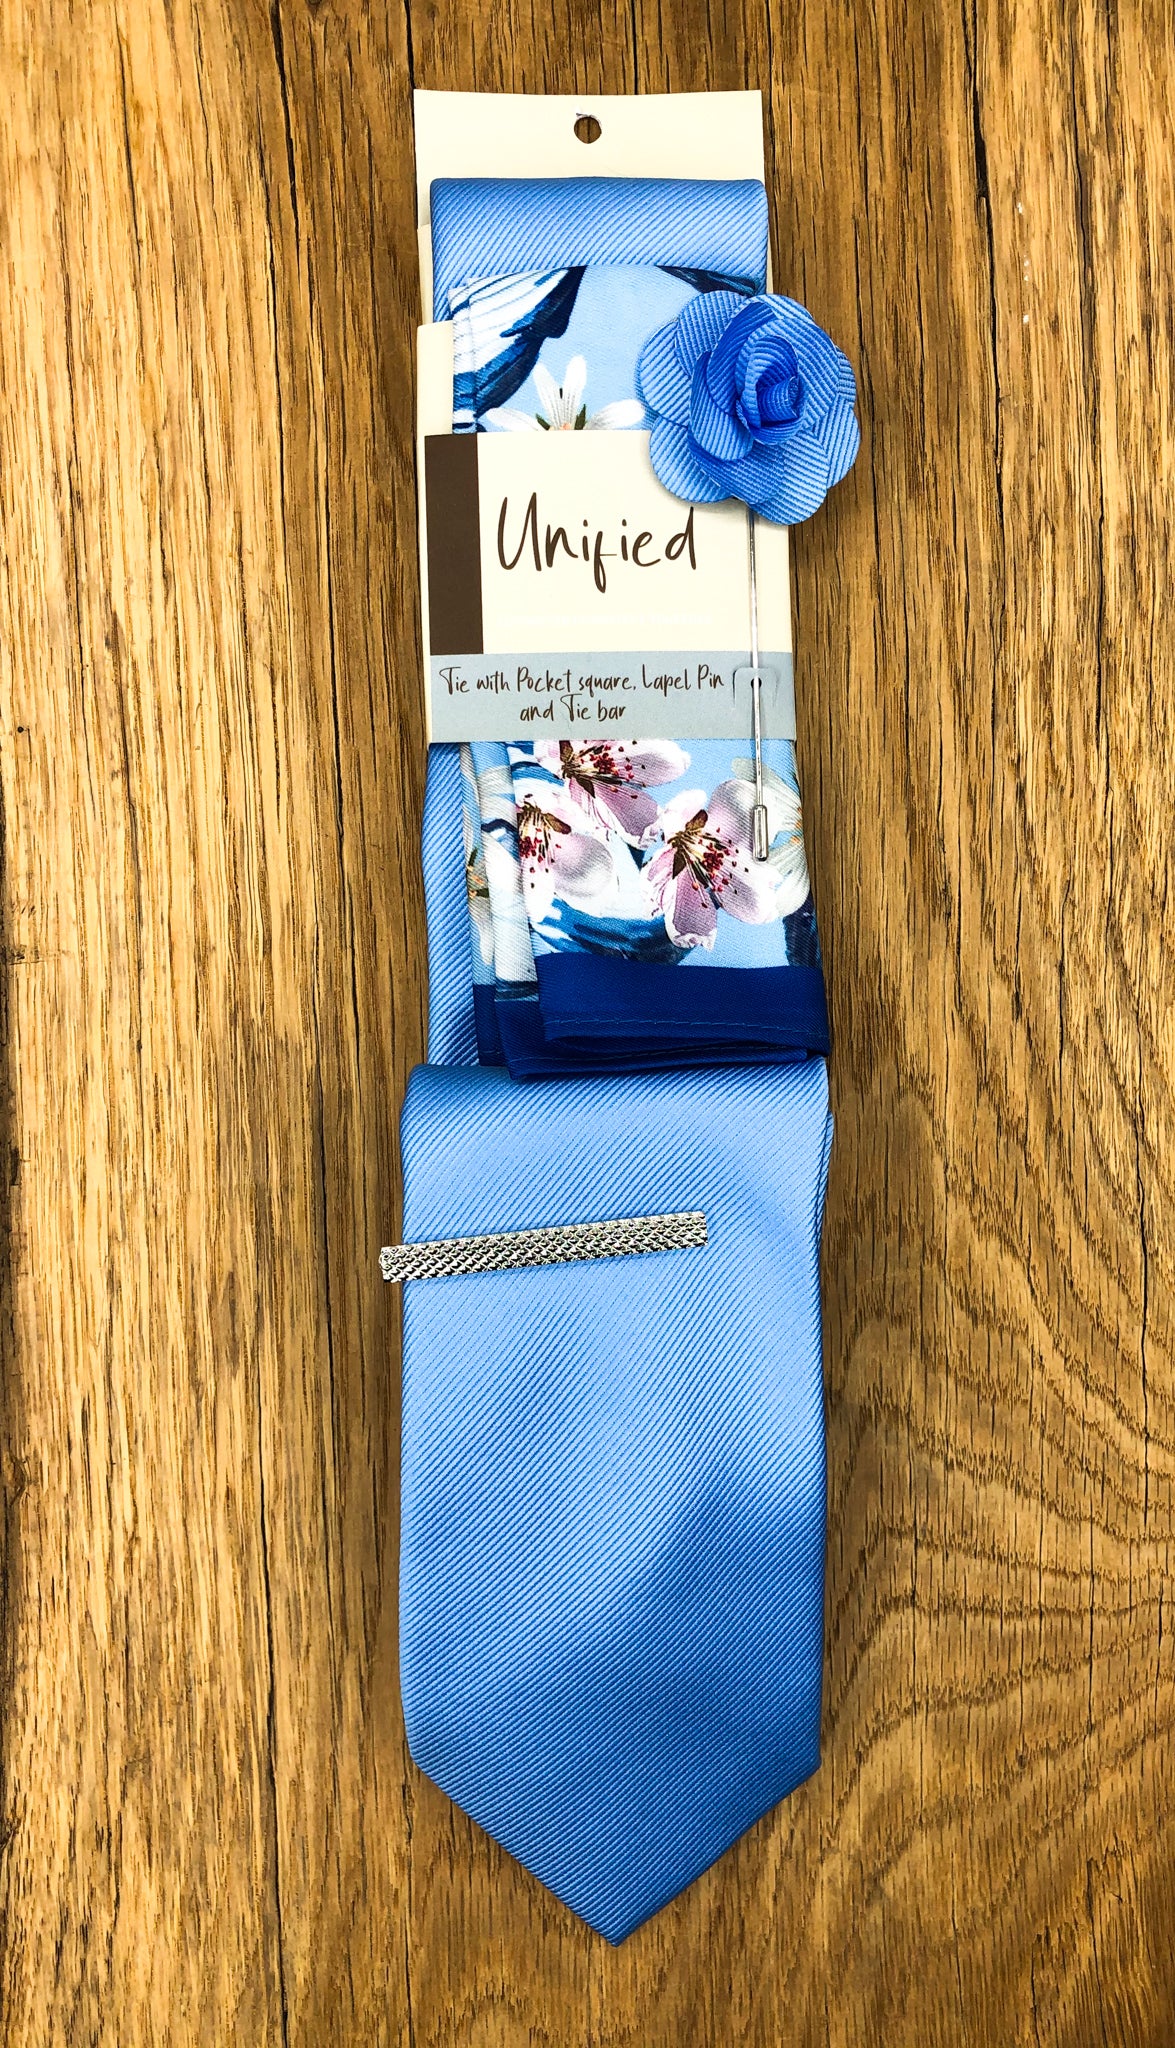 Men's sky blue tie, blue floral pocket square, lapel pin and tie bar